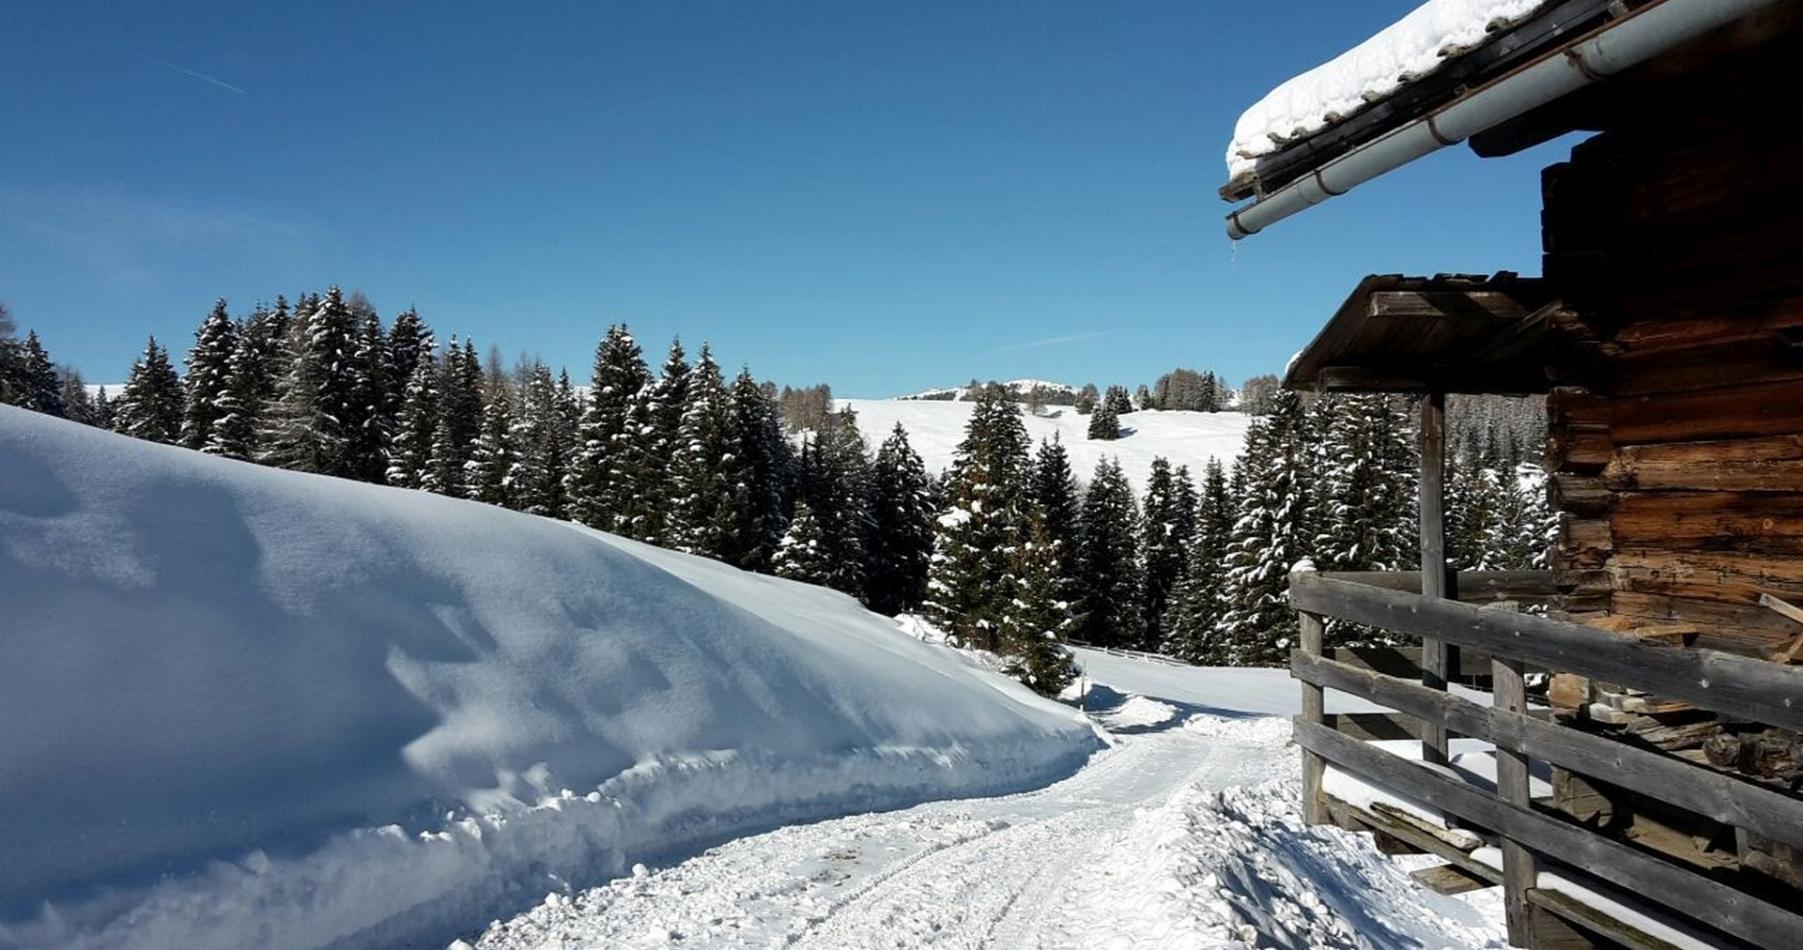 A mountain hut in winter